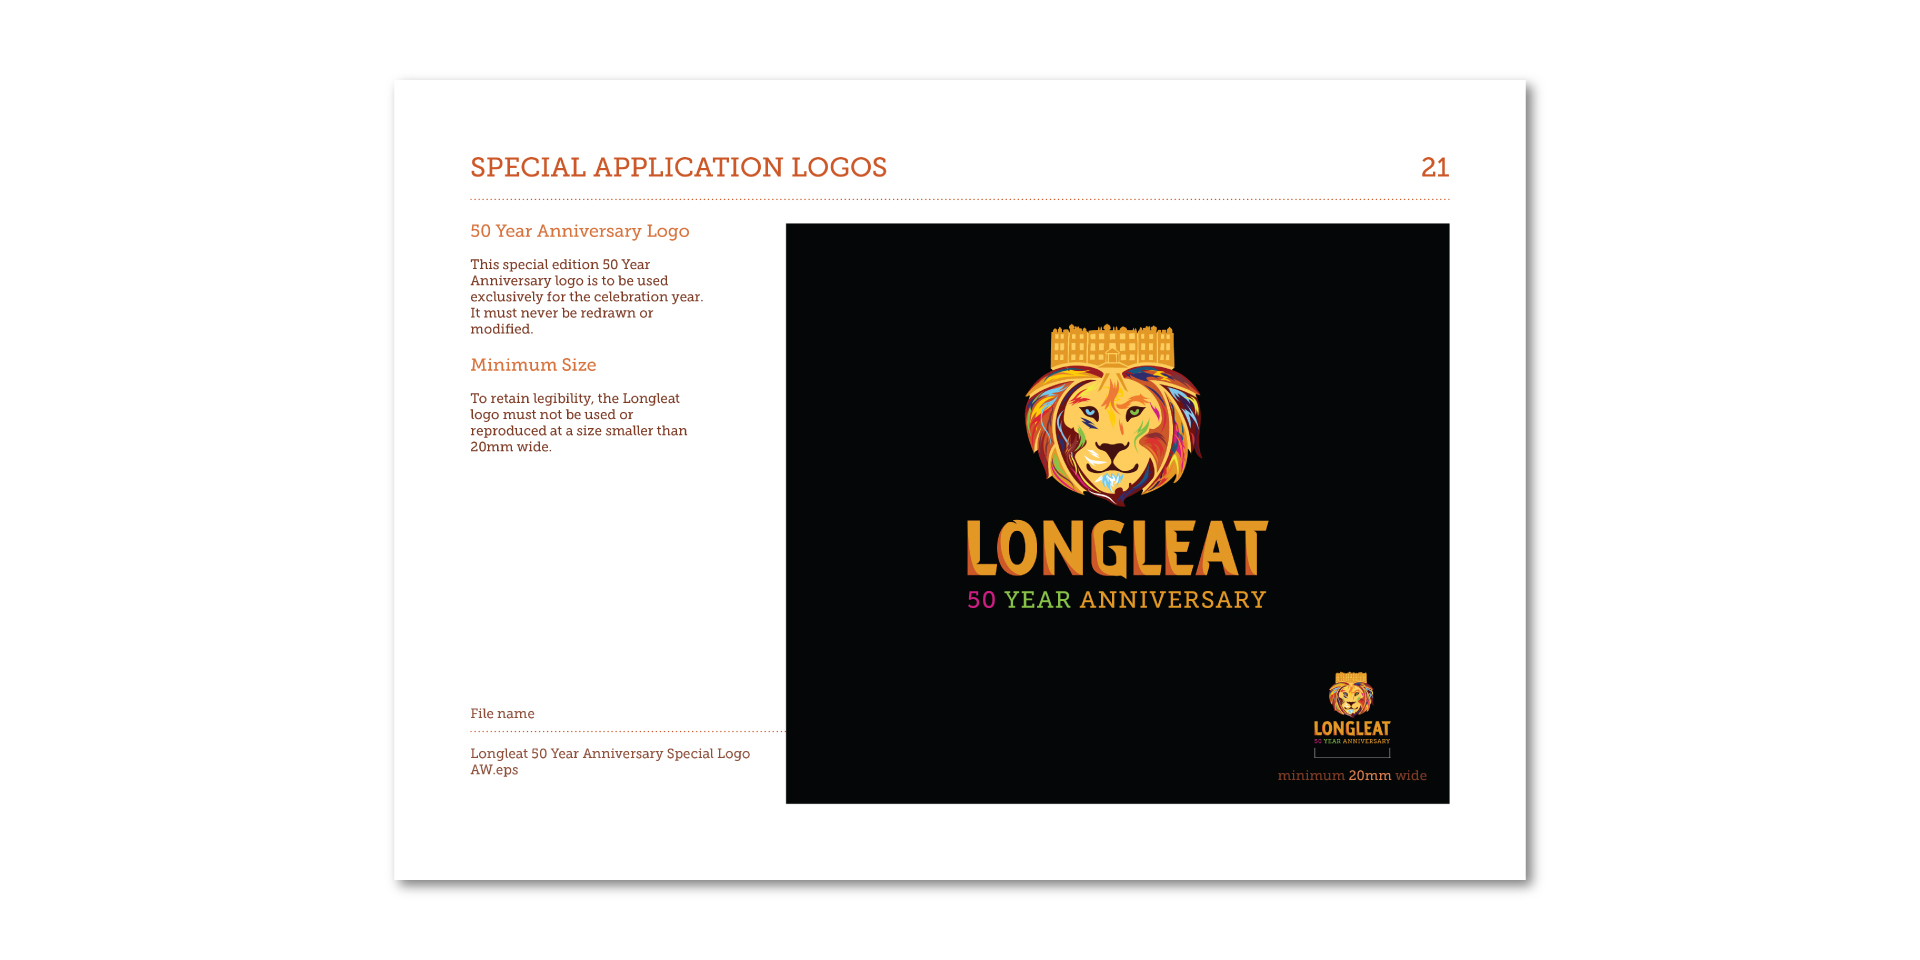 Longleat brand guidelines 50th Anniversary Logo